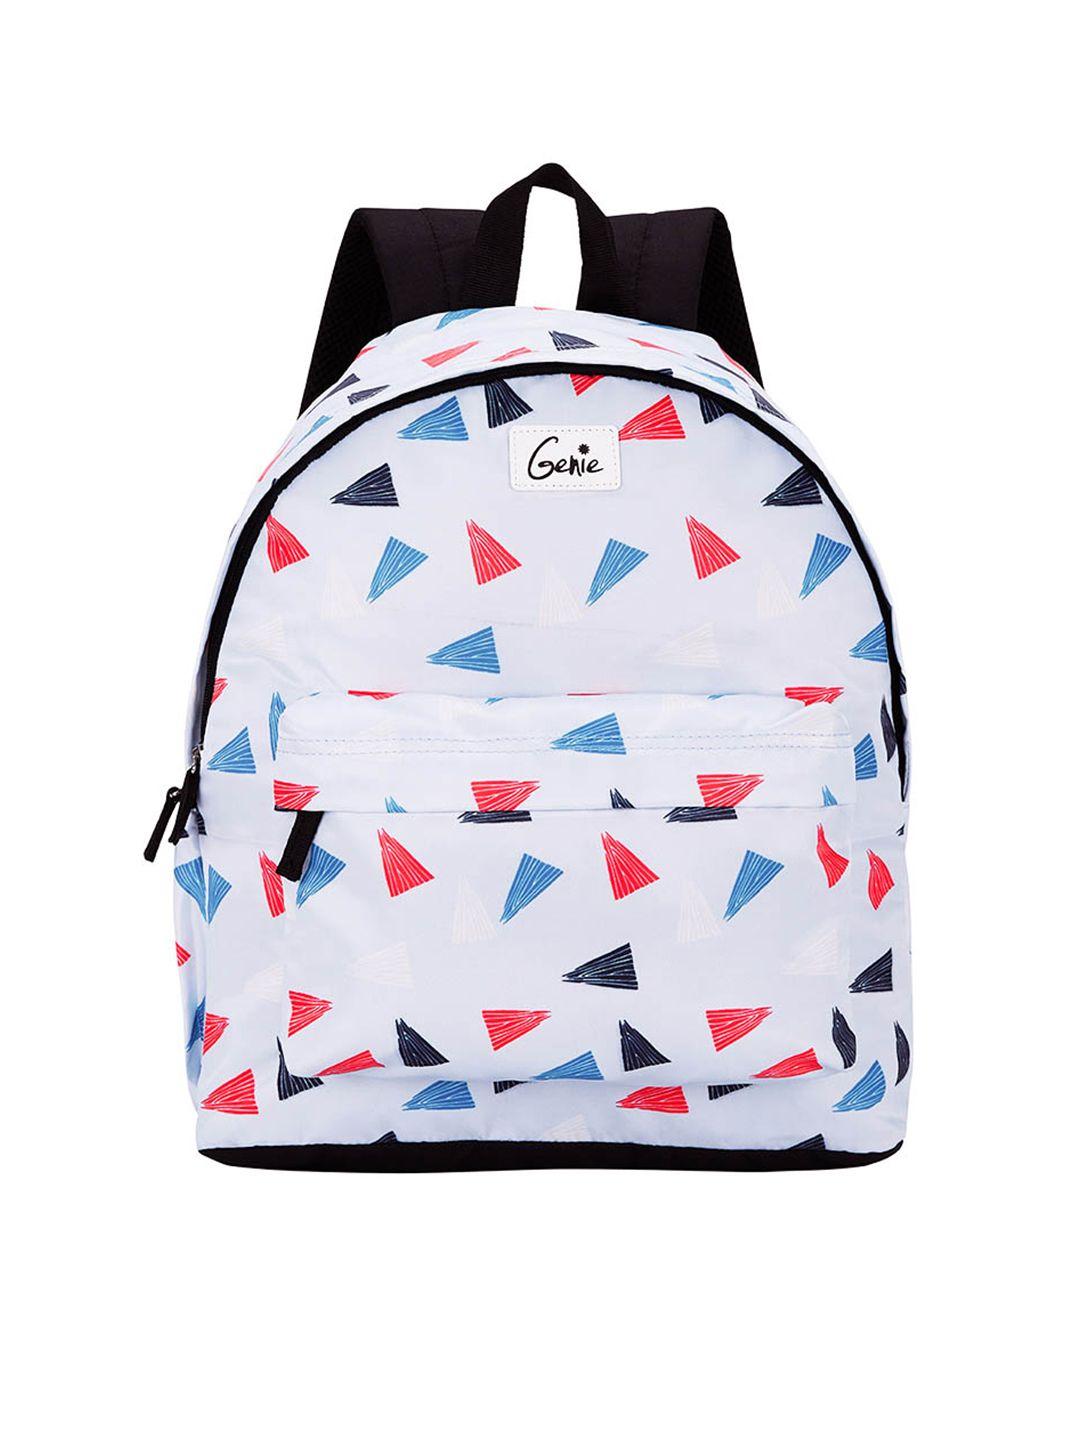 genie unisex geometric print medium casual backpack -20l